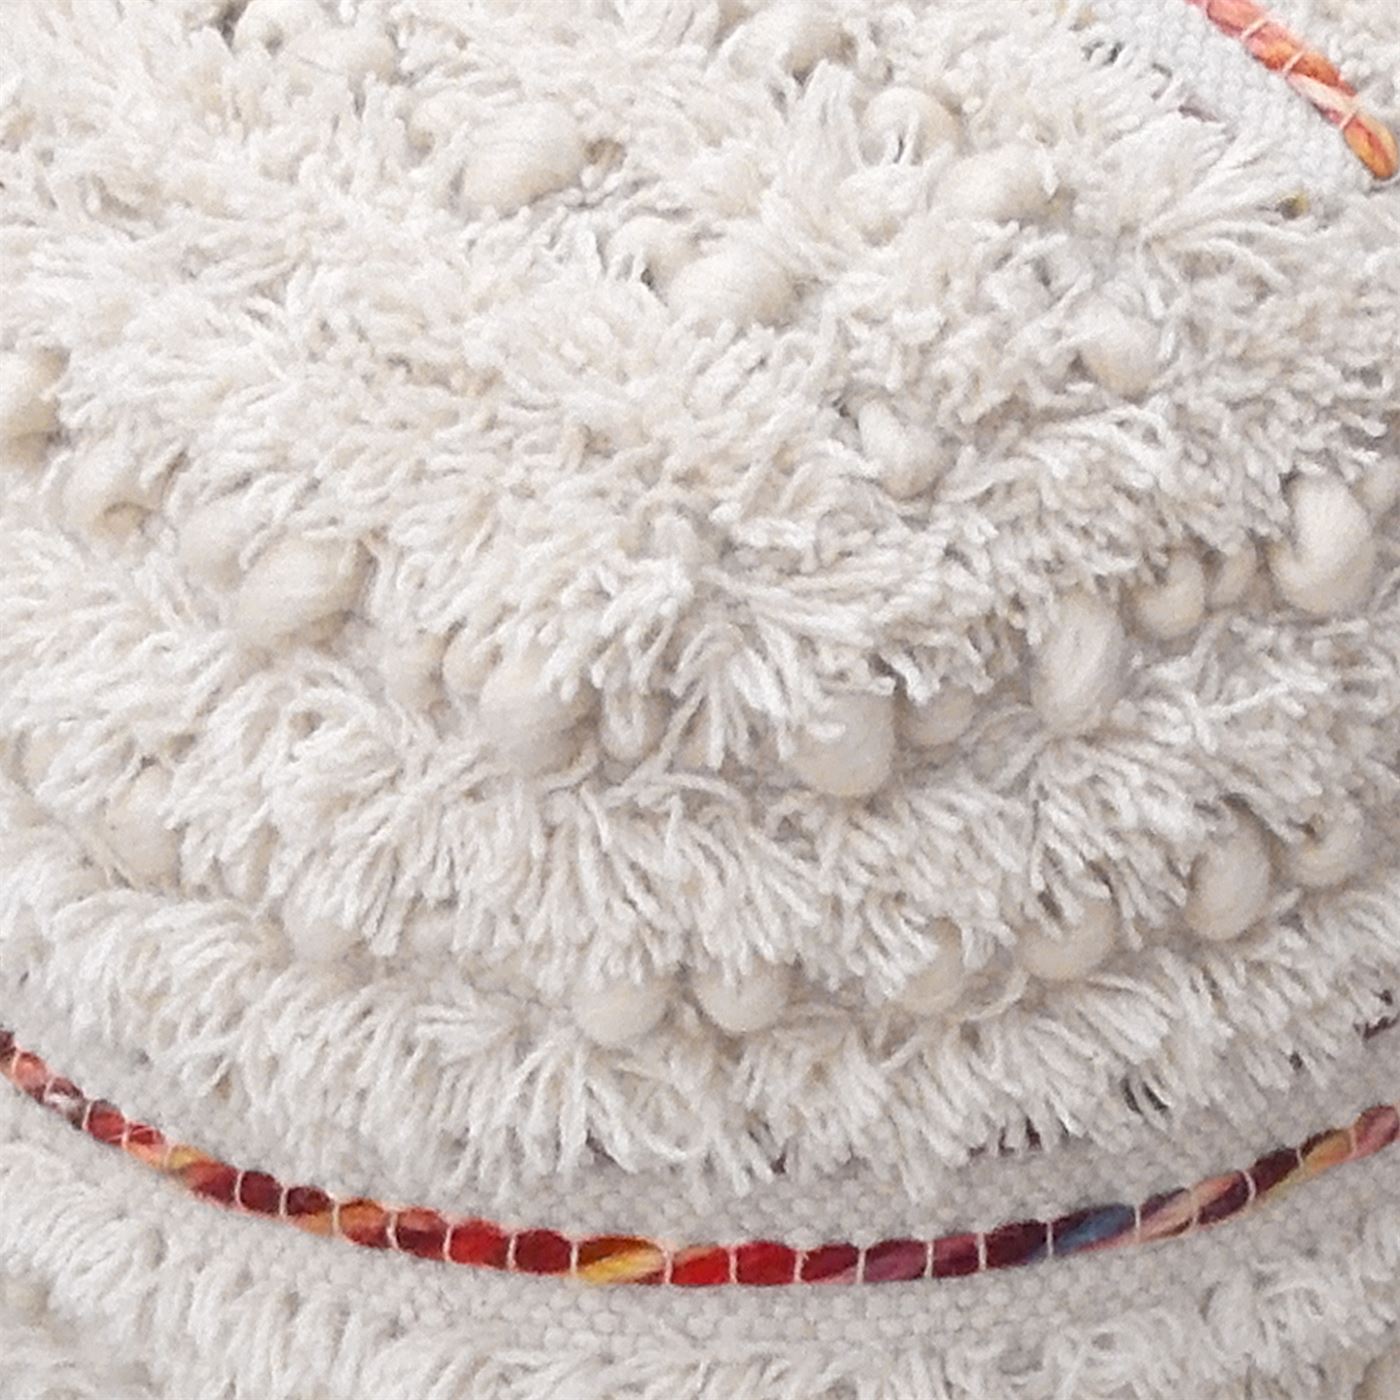 Berri Pouf, Wool, Natural White, Multi, Pitloom, Cut And Loop 